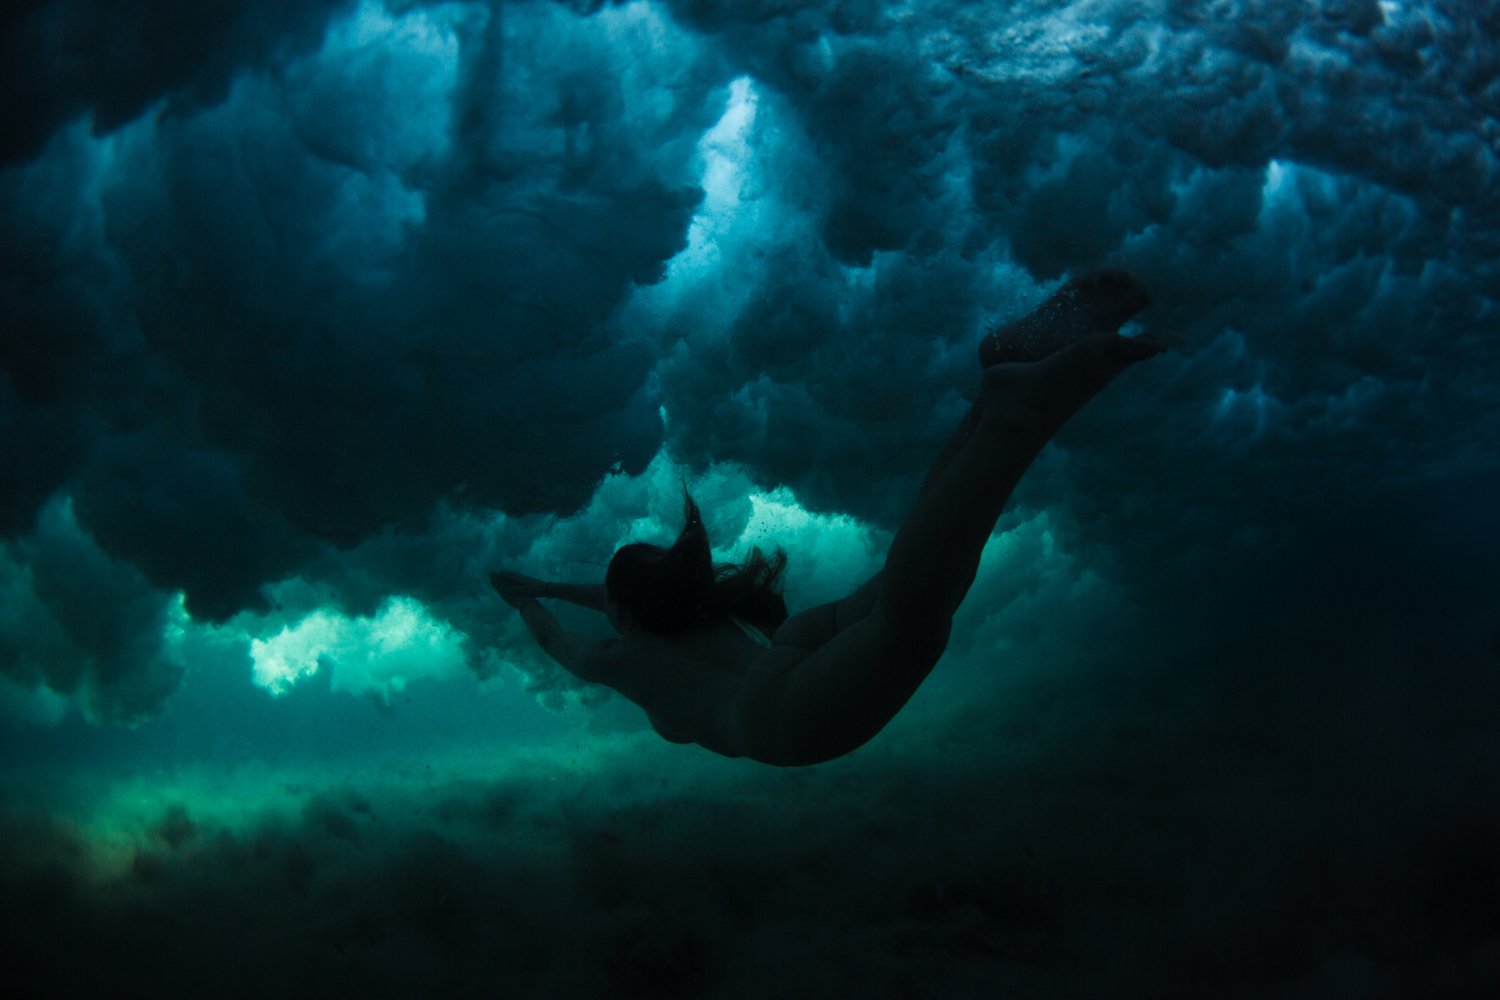 underwater corse corsica sea mediterranean island france french photographer photographe ajaccio Krista Espino Capo di feno wave nude nue femme woman fine art photography-78.jpg